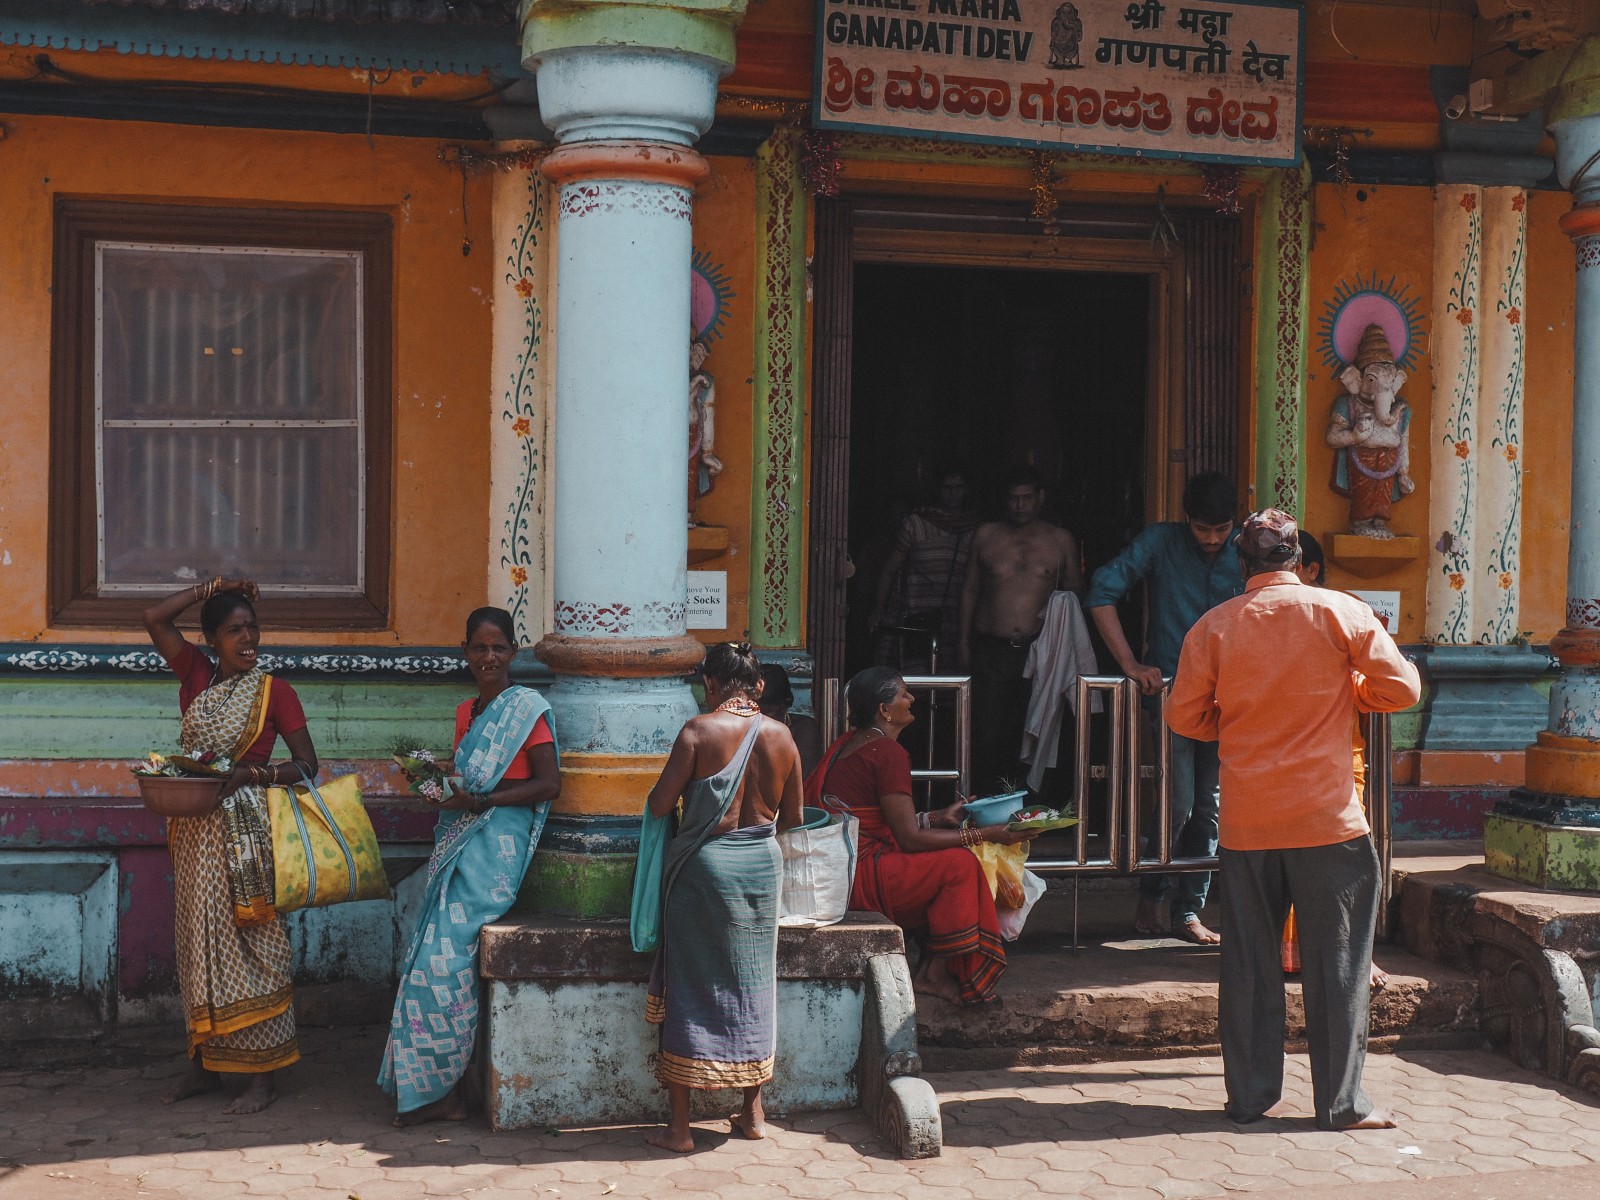 Women outside of the Maha Ganapati Temple in Gokarna